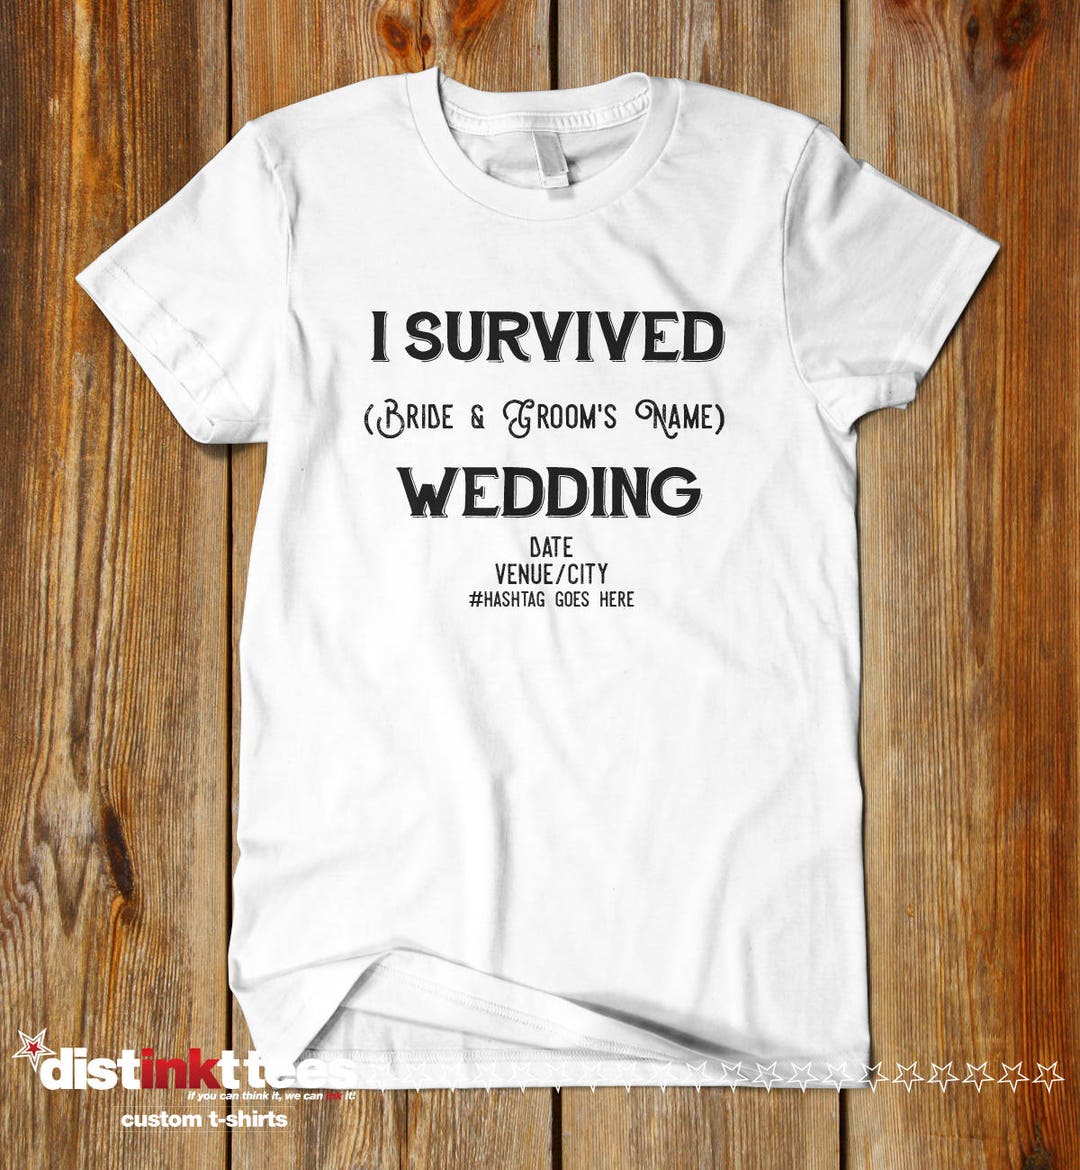 I SURVIVED WEDDING Shirts